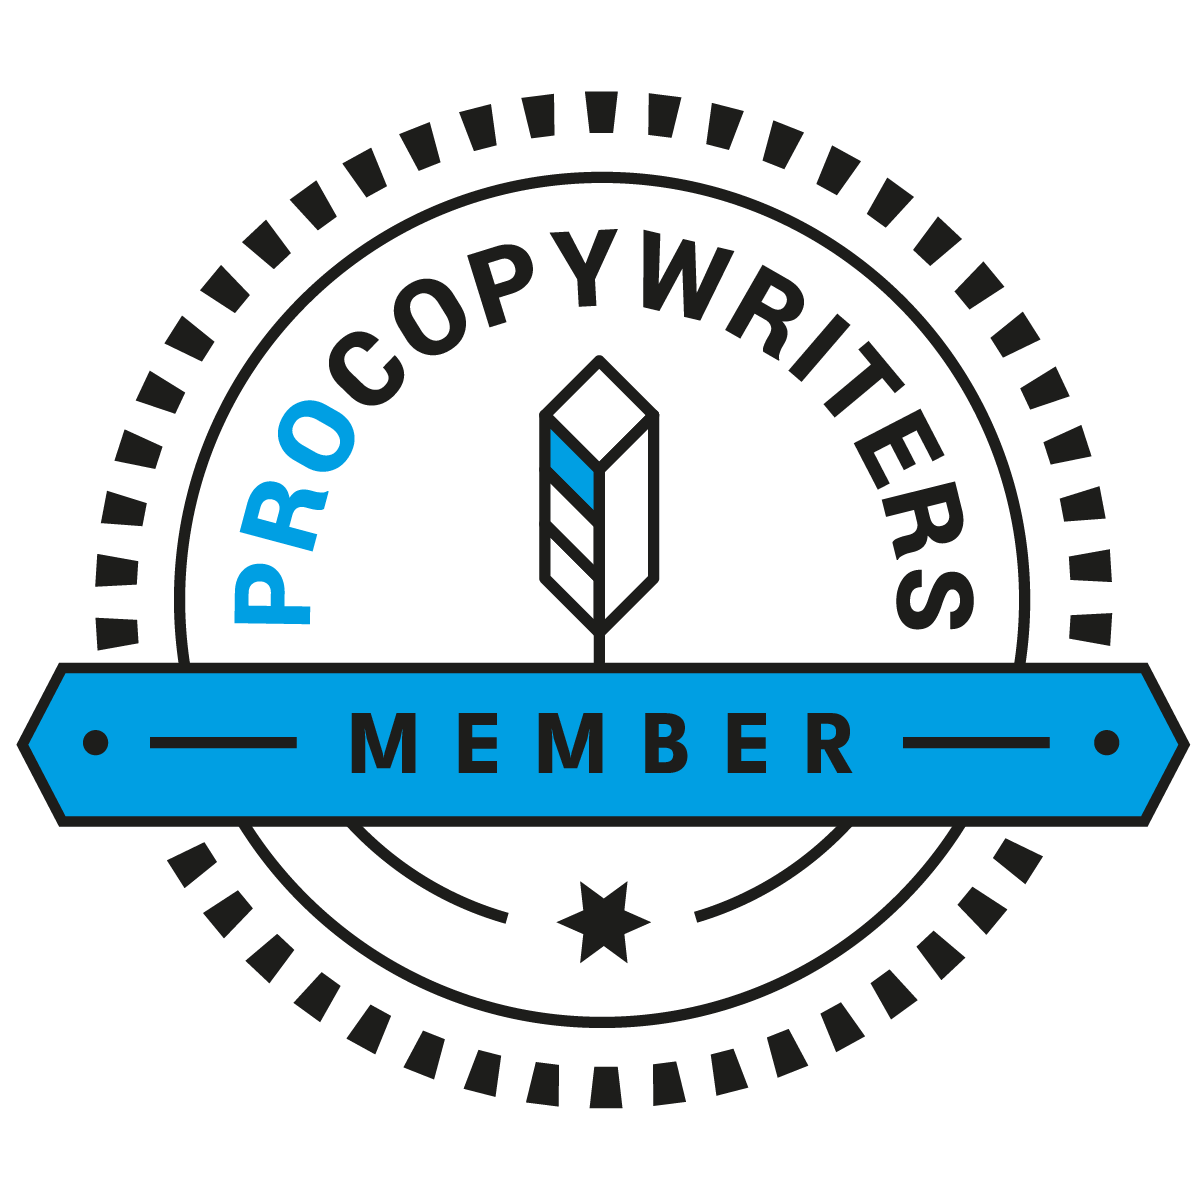 Pro Copywriters member